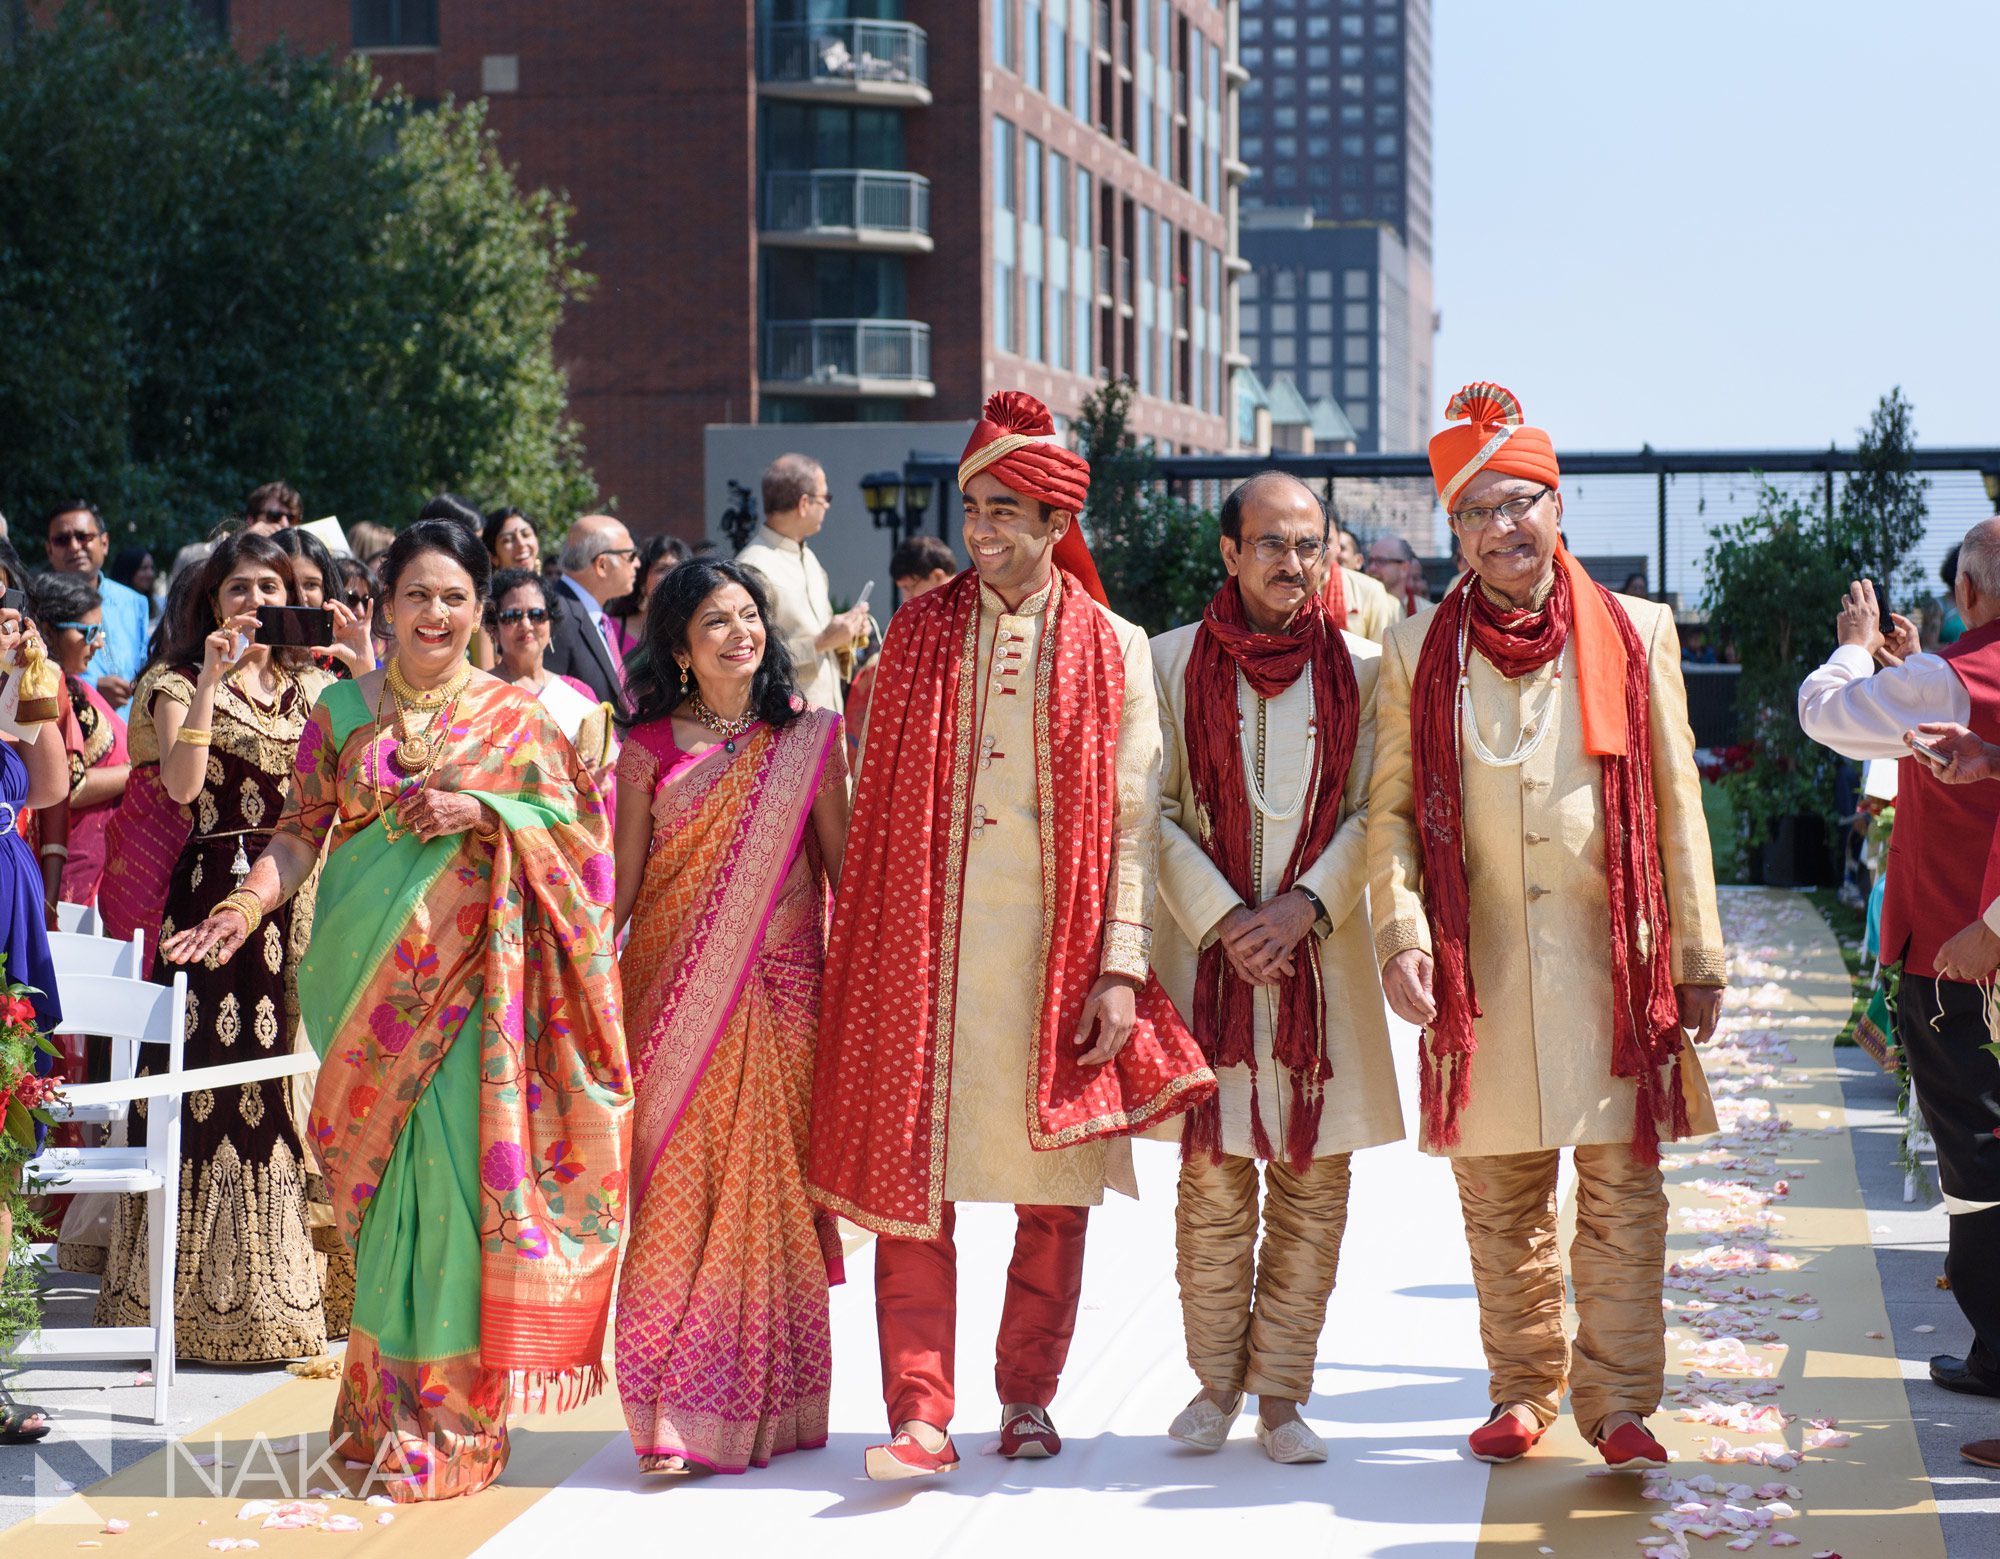 chicago loews hotel wedding pictures indian hindu